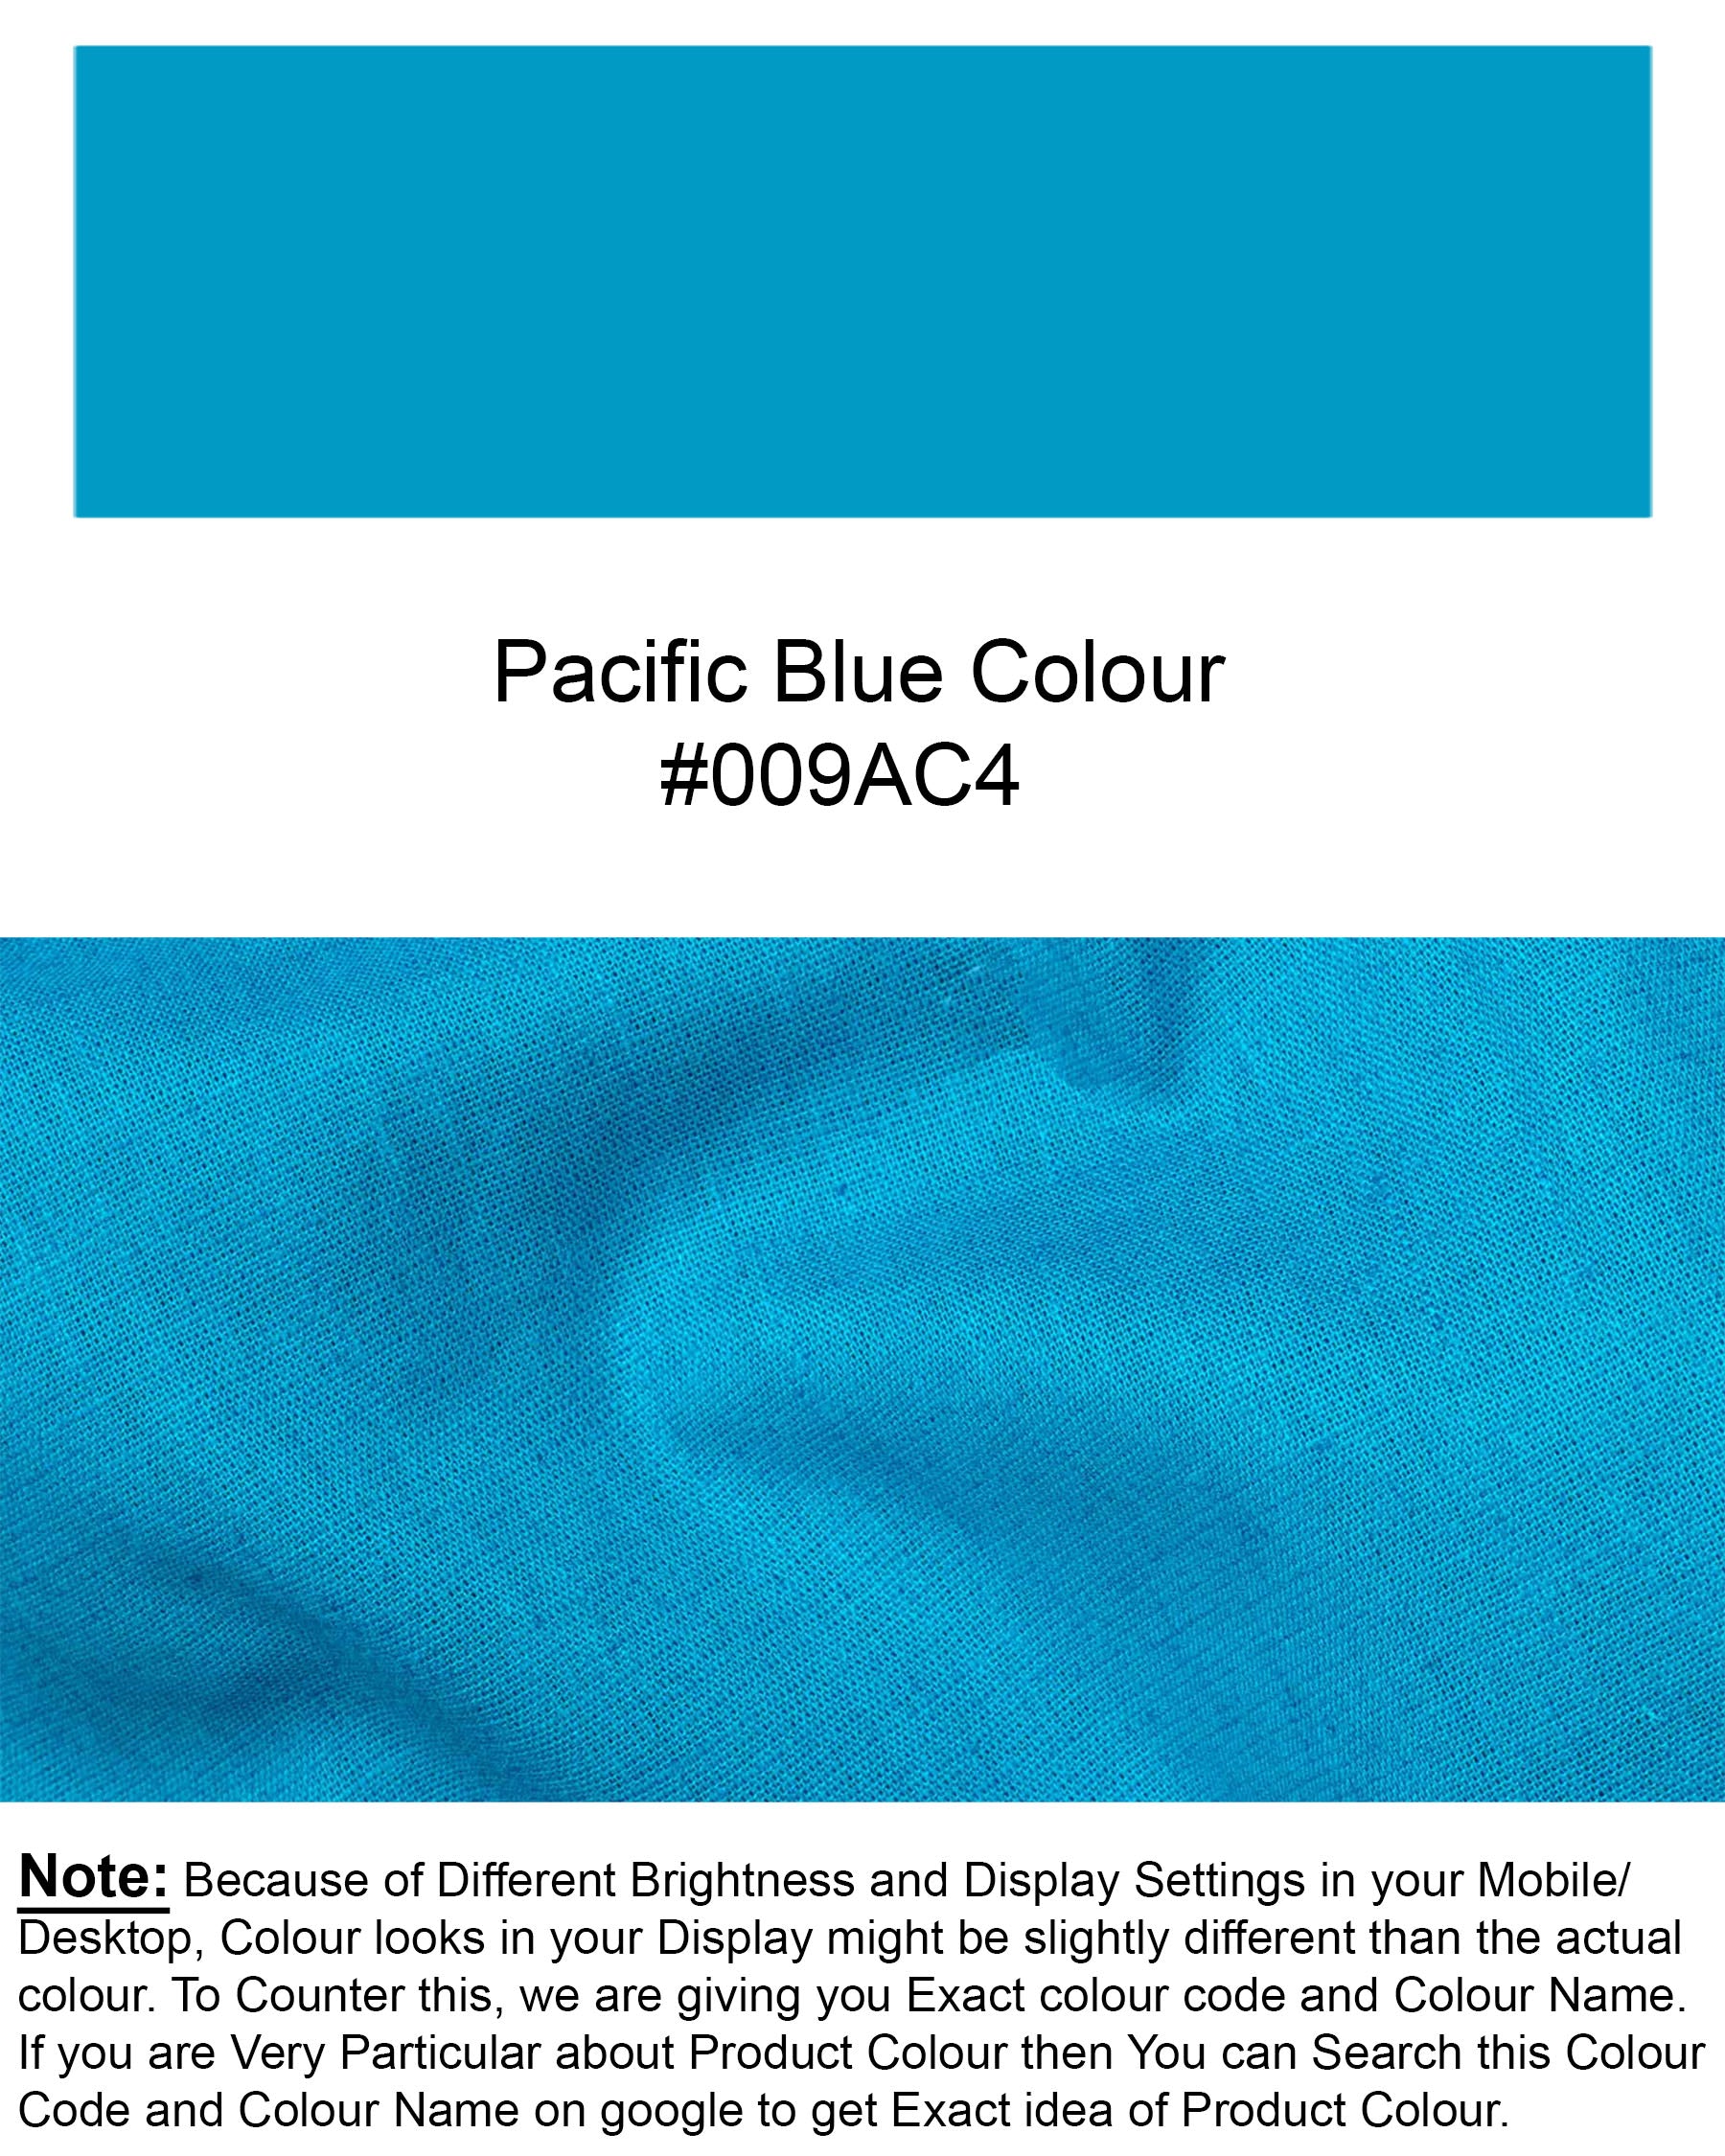 Pacific Blue Luxurious Linen Shirt 6867-BD-38, 6867-BD-H-38, 6867-BD-39, 6867-BD-H-39, 6867-BD-40, 6867-BD-H-40, 6867-BD-42, 6867-BD-H-42, 6867-BD-44, 6867-BD-H-44, 6867-BD-46, 6867-BD-H-46, 6867-BD-48, 6867-BD-H-48, 6867-BD-50, 6867-BD-H-50, 6867-BD-52, 6867-BD-H-52